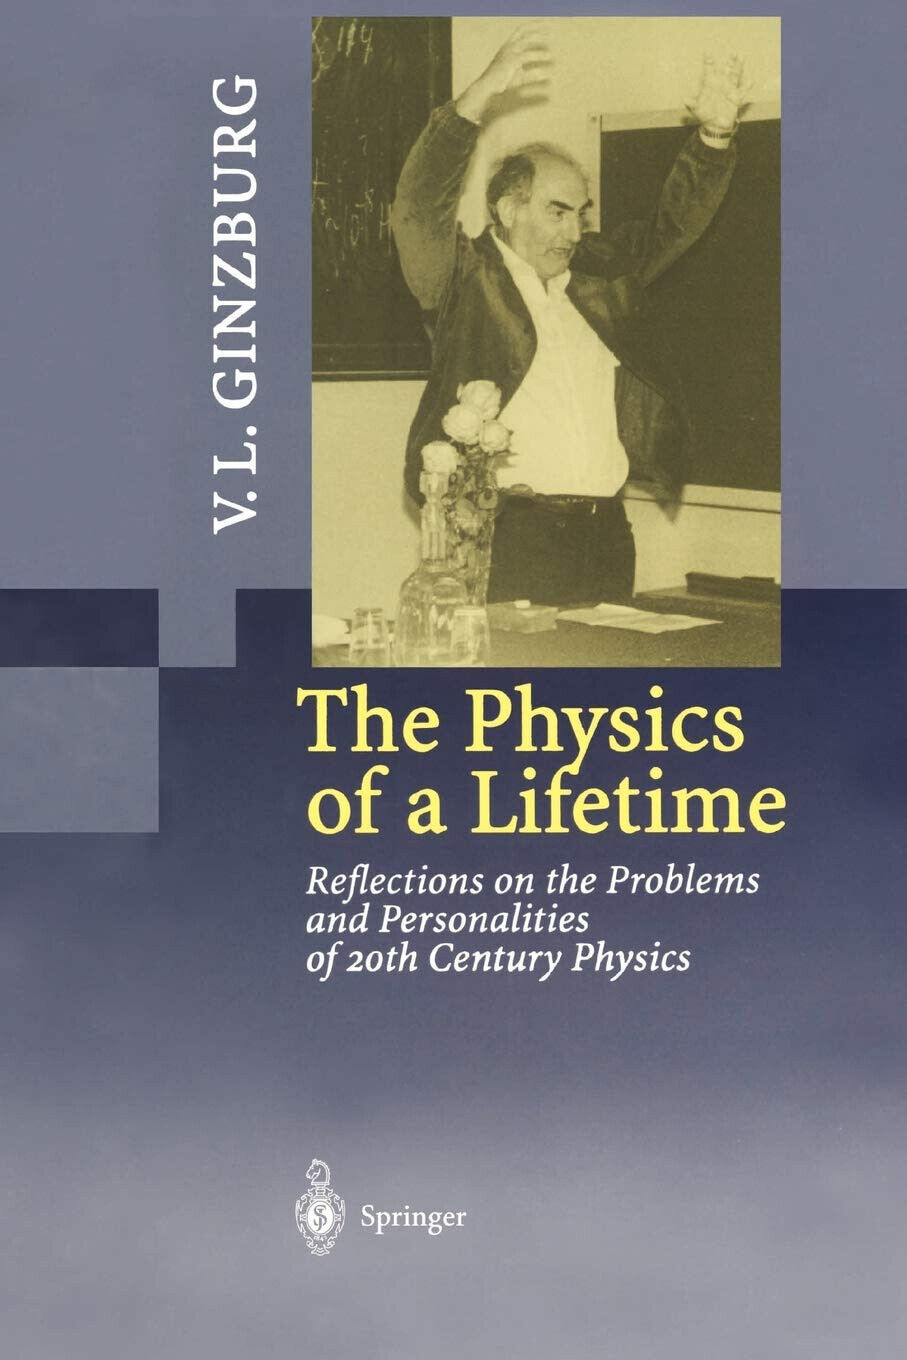 The Physics of a Lifetime - Vitaly L. Ginzburg - Springer, 2010